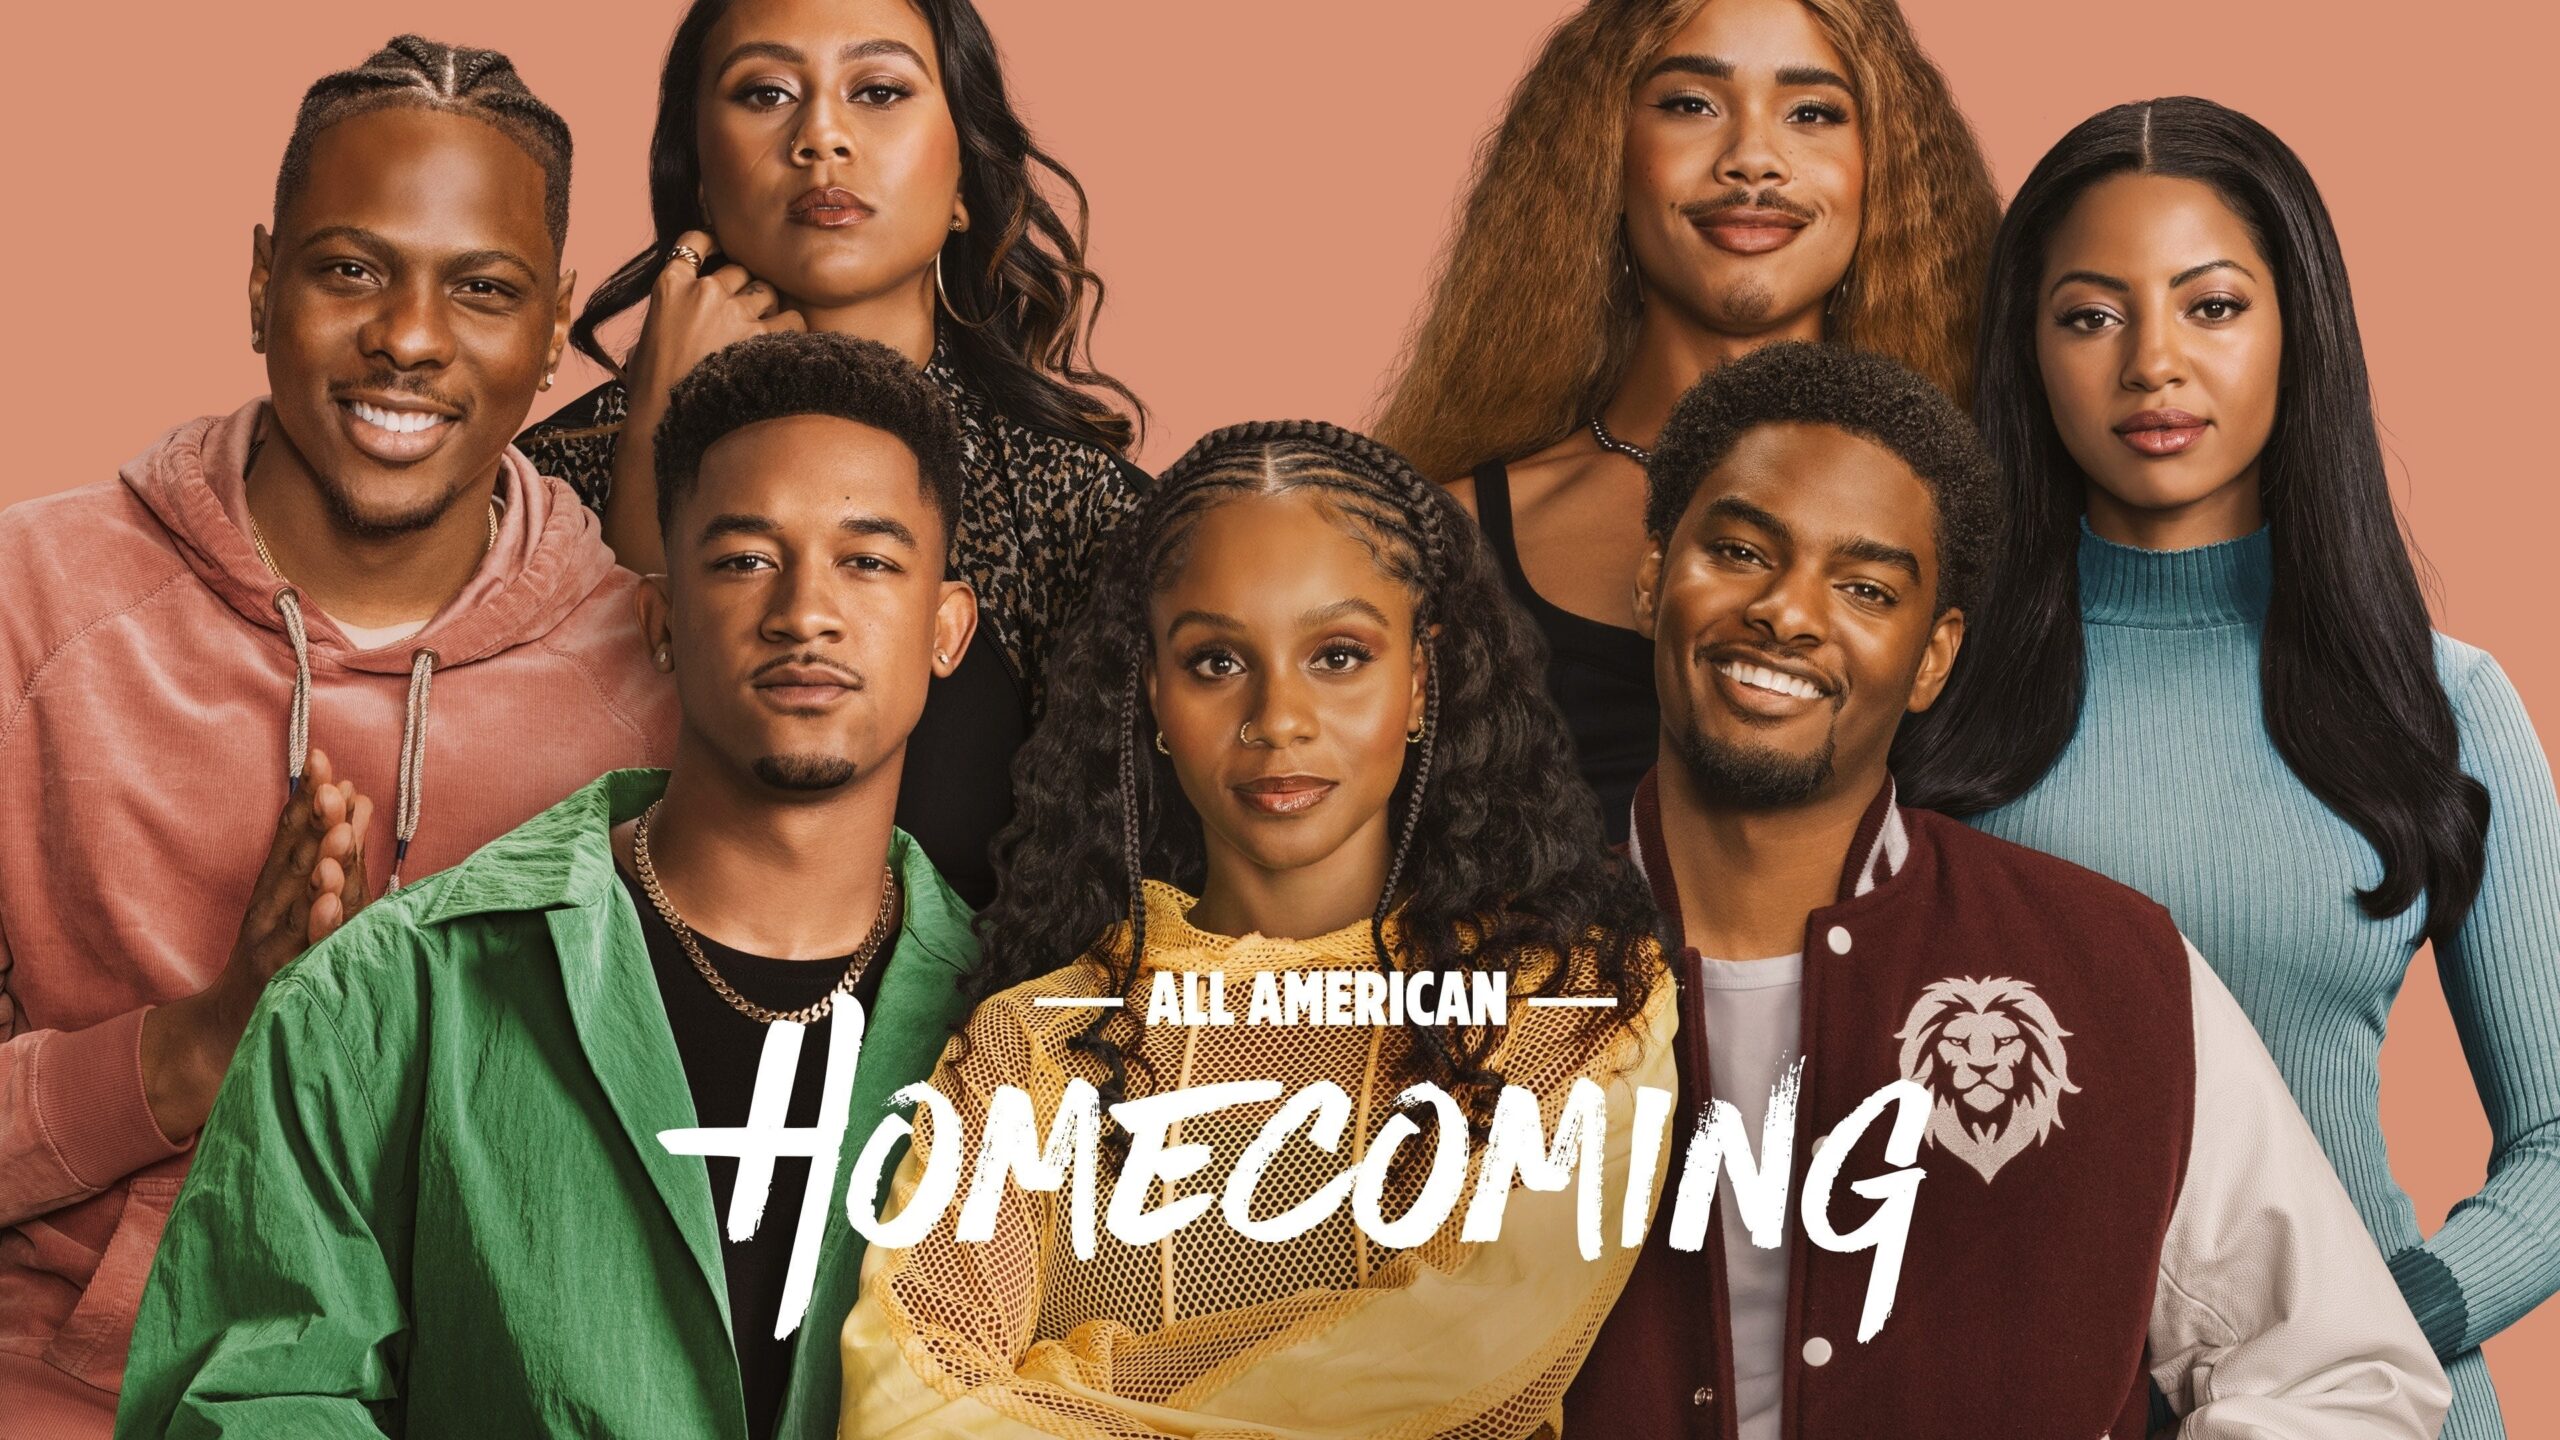 All American Homecoming Season 2, All American Homecoming Season 2 release date Netflix, where can I watch All American Homecoming Season 2, All American Homecoming Season 2 release date